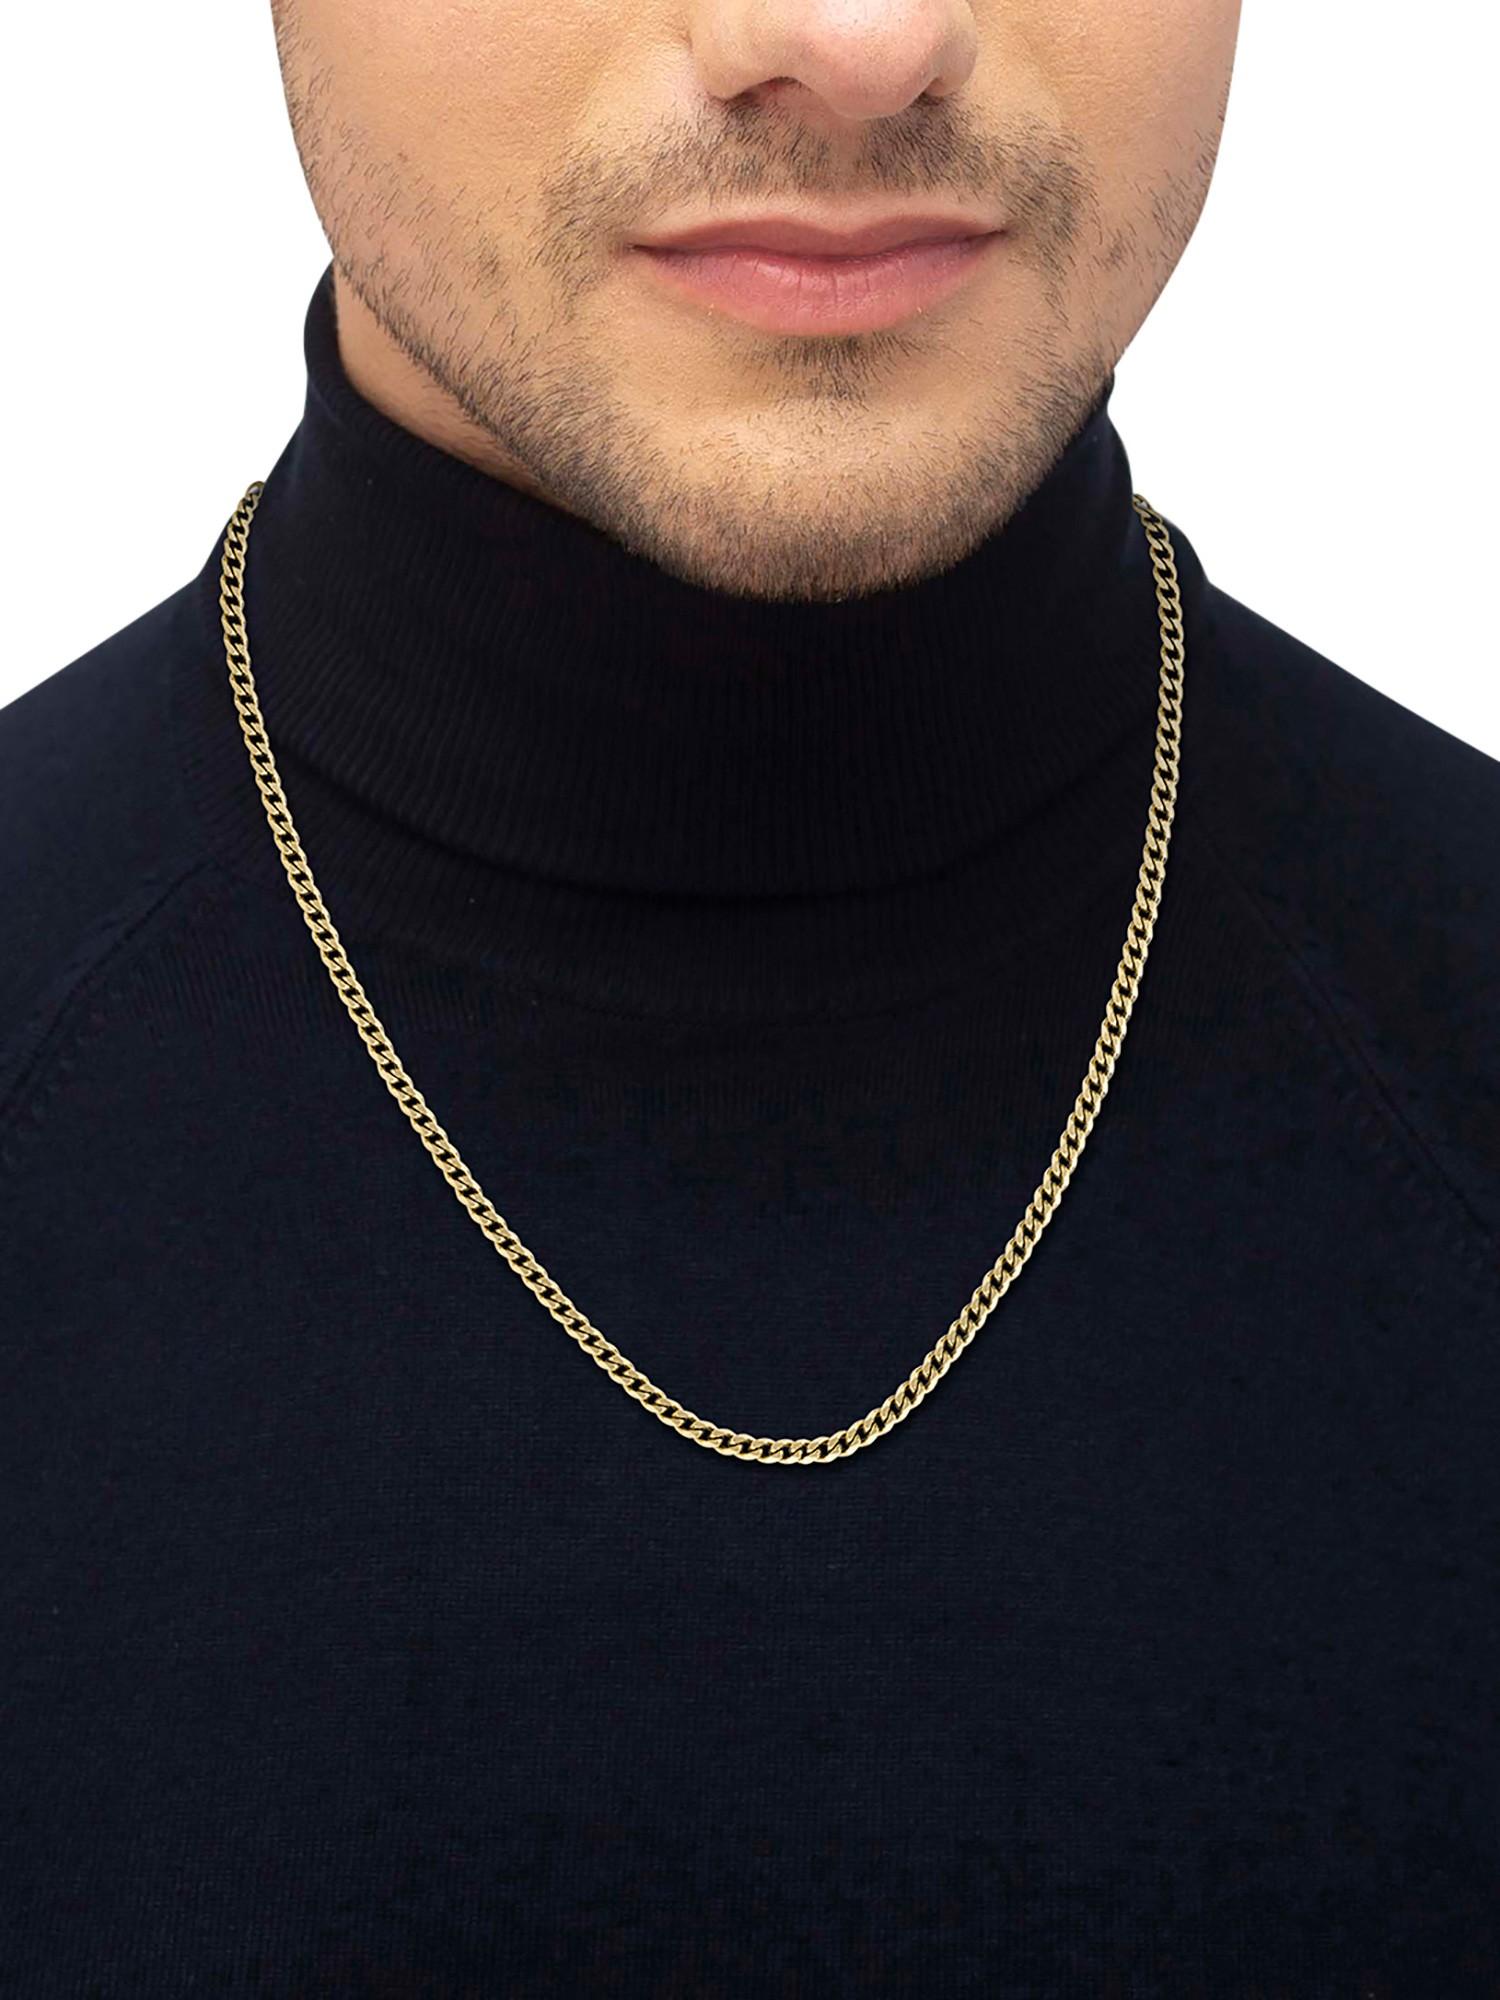 BOSS Jewelry Men's BLENDED Collection Leather Bracelet Black - 1580150M :  Amazon.co.uk: Fashion